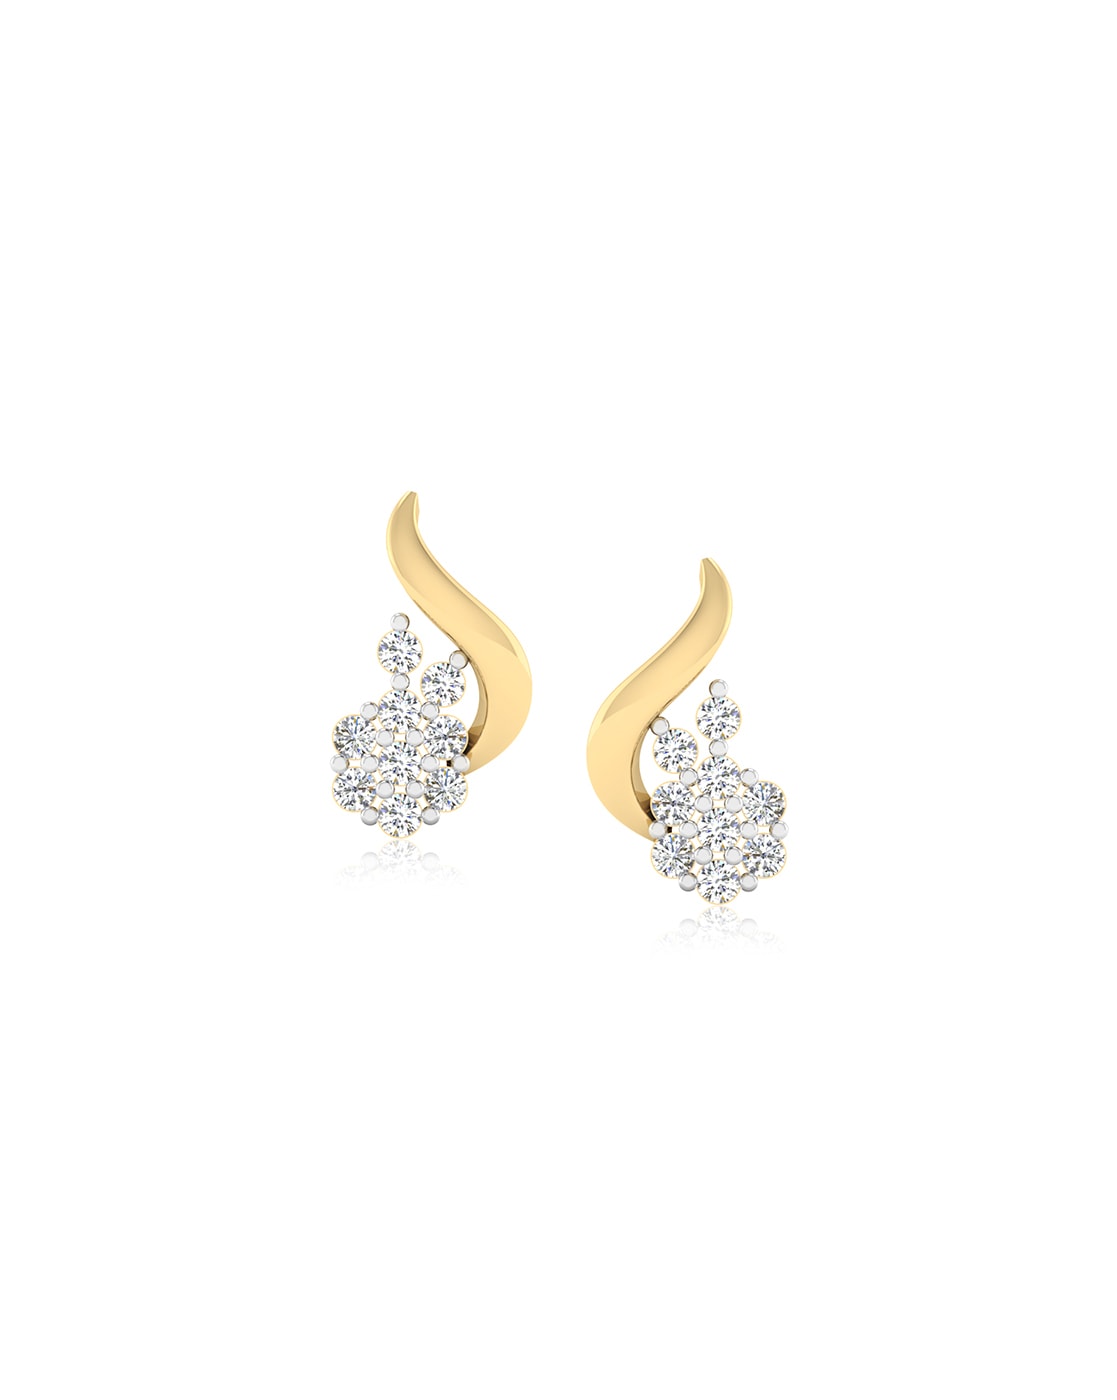 Buy Real Diamond Earrings Online | Real Diamond Earrings by Manubhai.-sgquangbinhtourist.com.vn